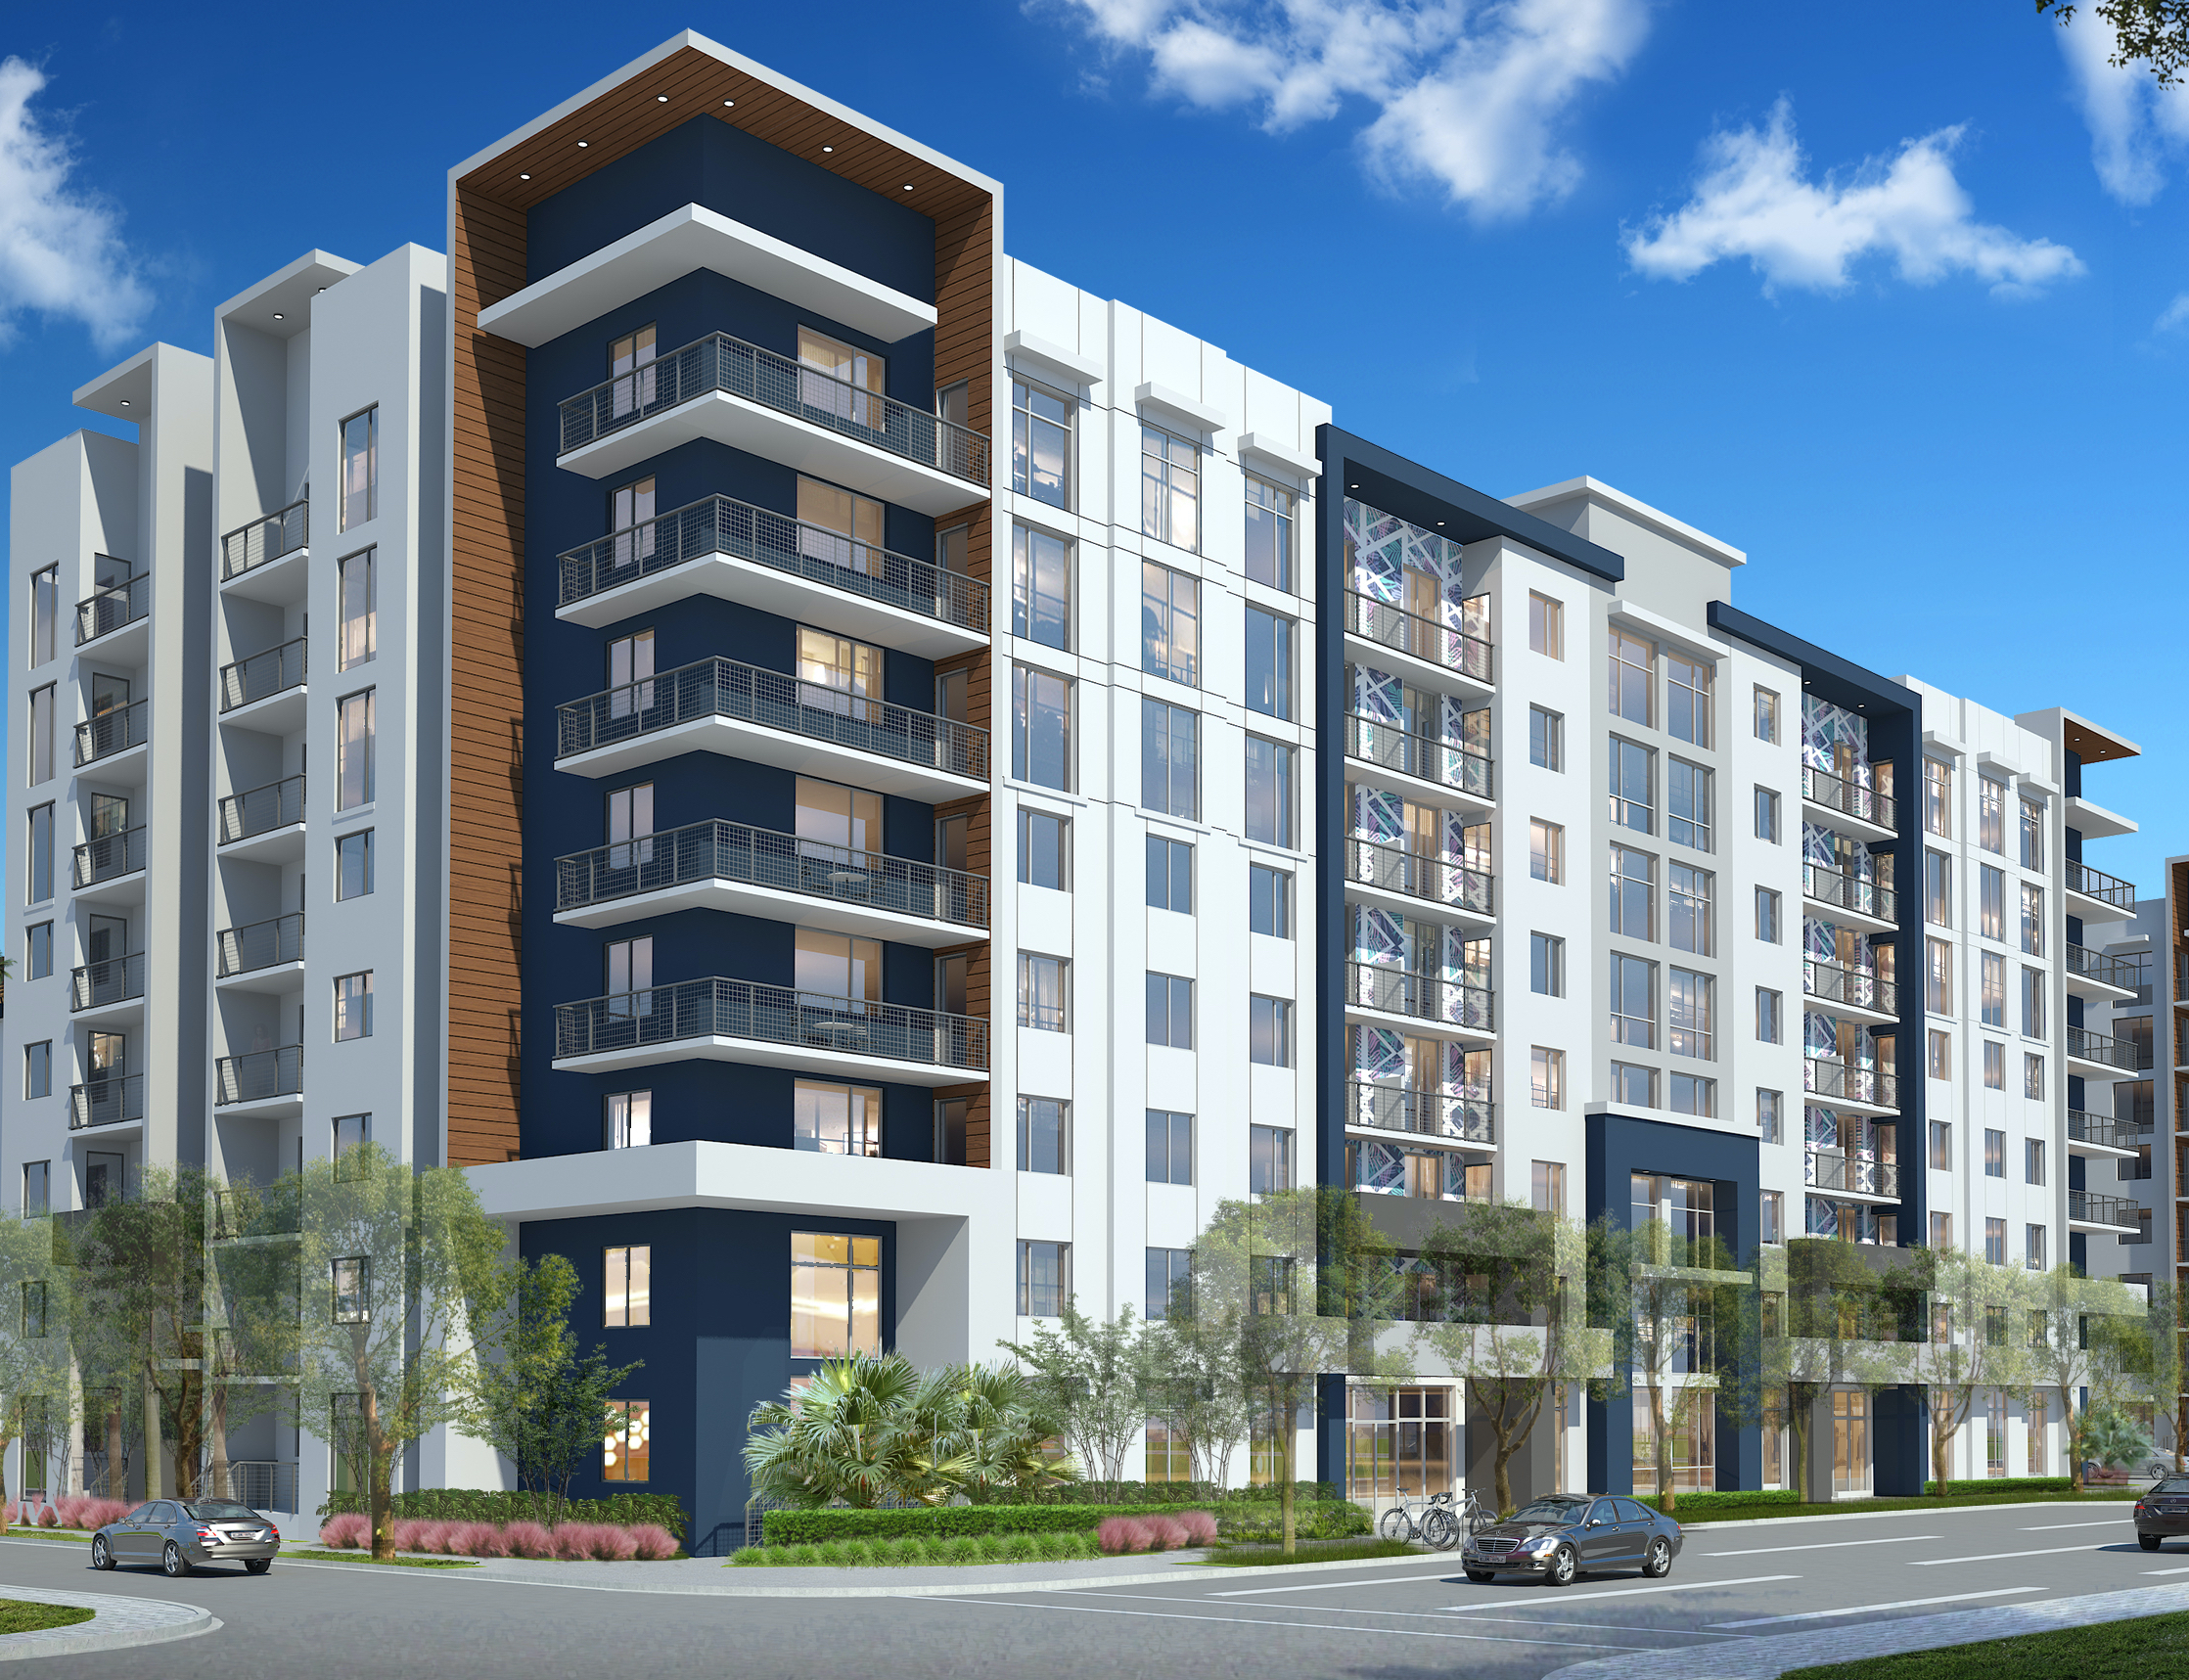 Tortoise Properties Secures $88.5 Million Construction Loan for 264-Unit Luxury Apartment Development in West Palm Beach